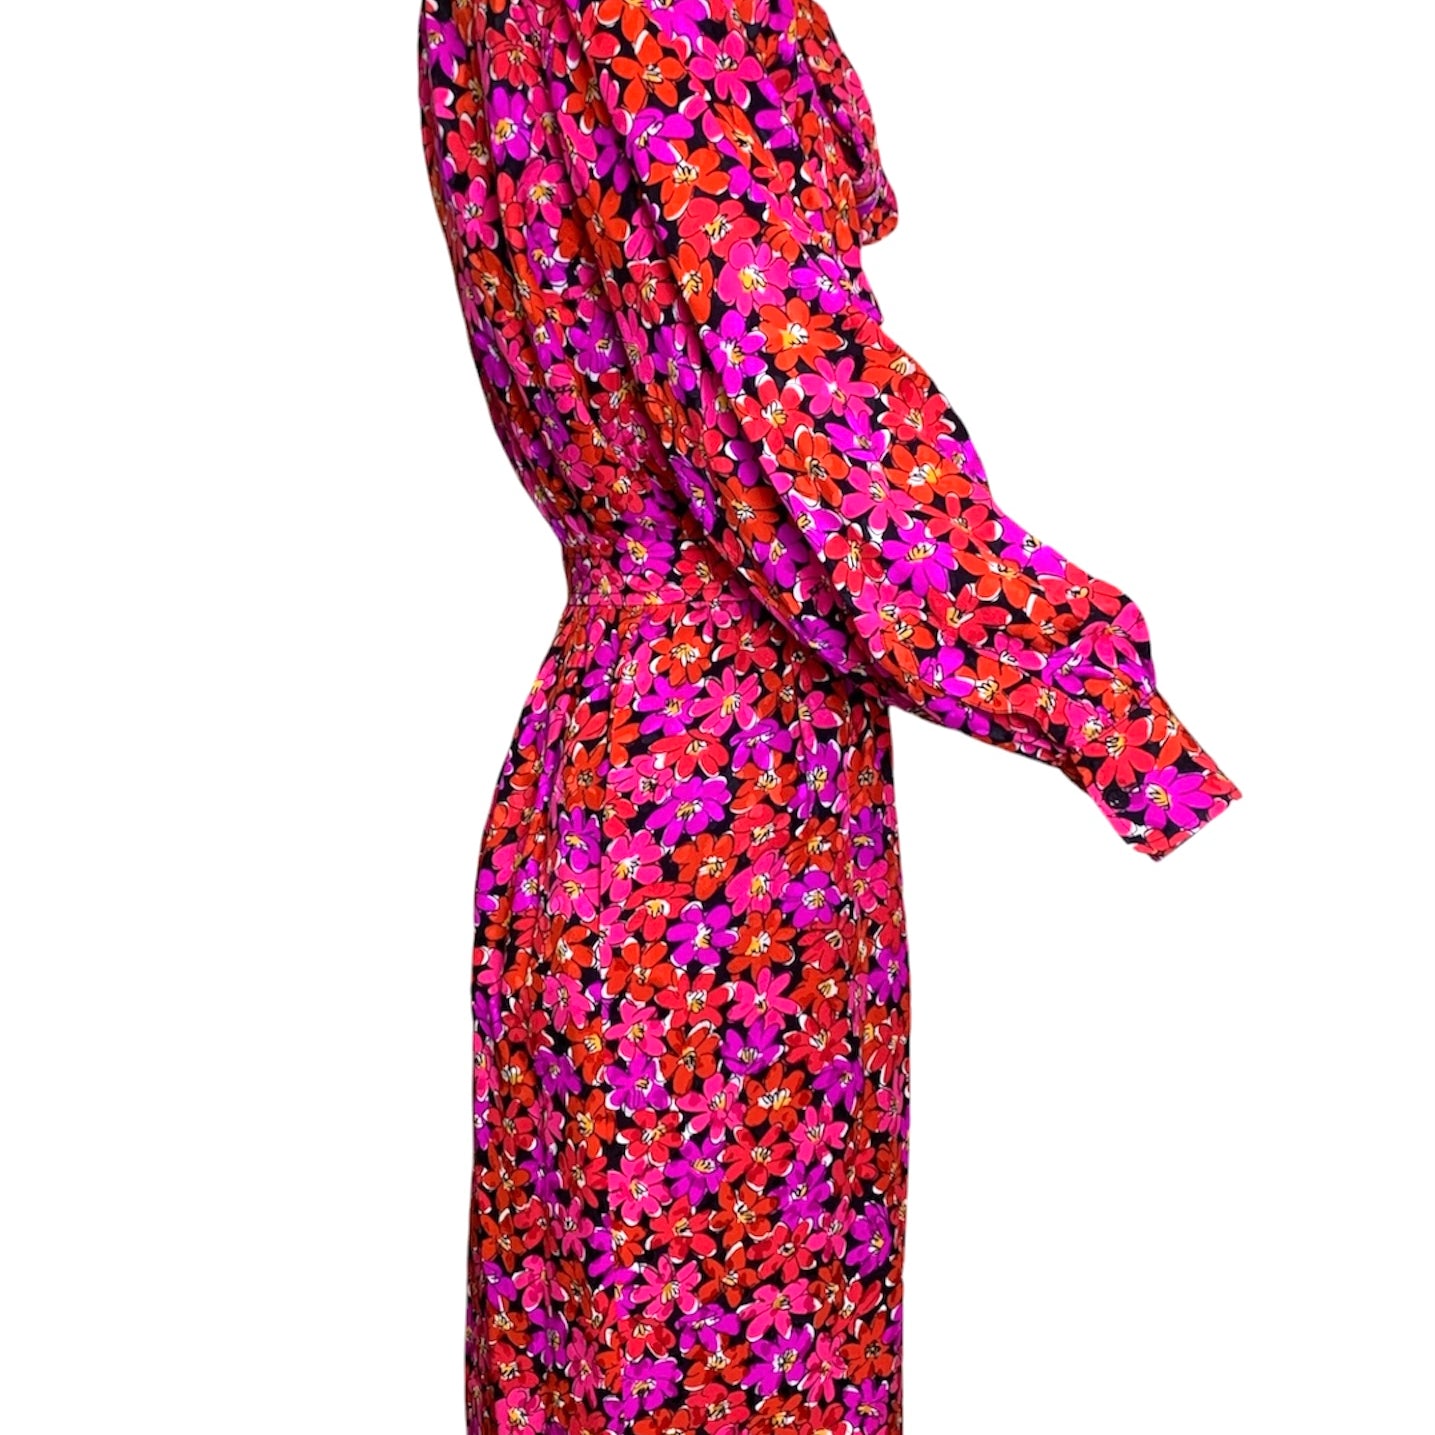 1989 Saint Laurent Magenta Silk Floral Print Dress Ensemble FULL ENSEMBLE SIDE